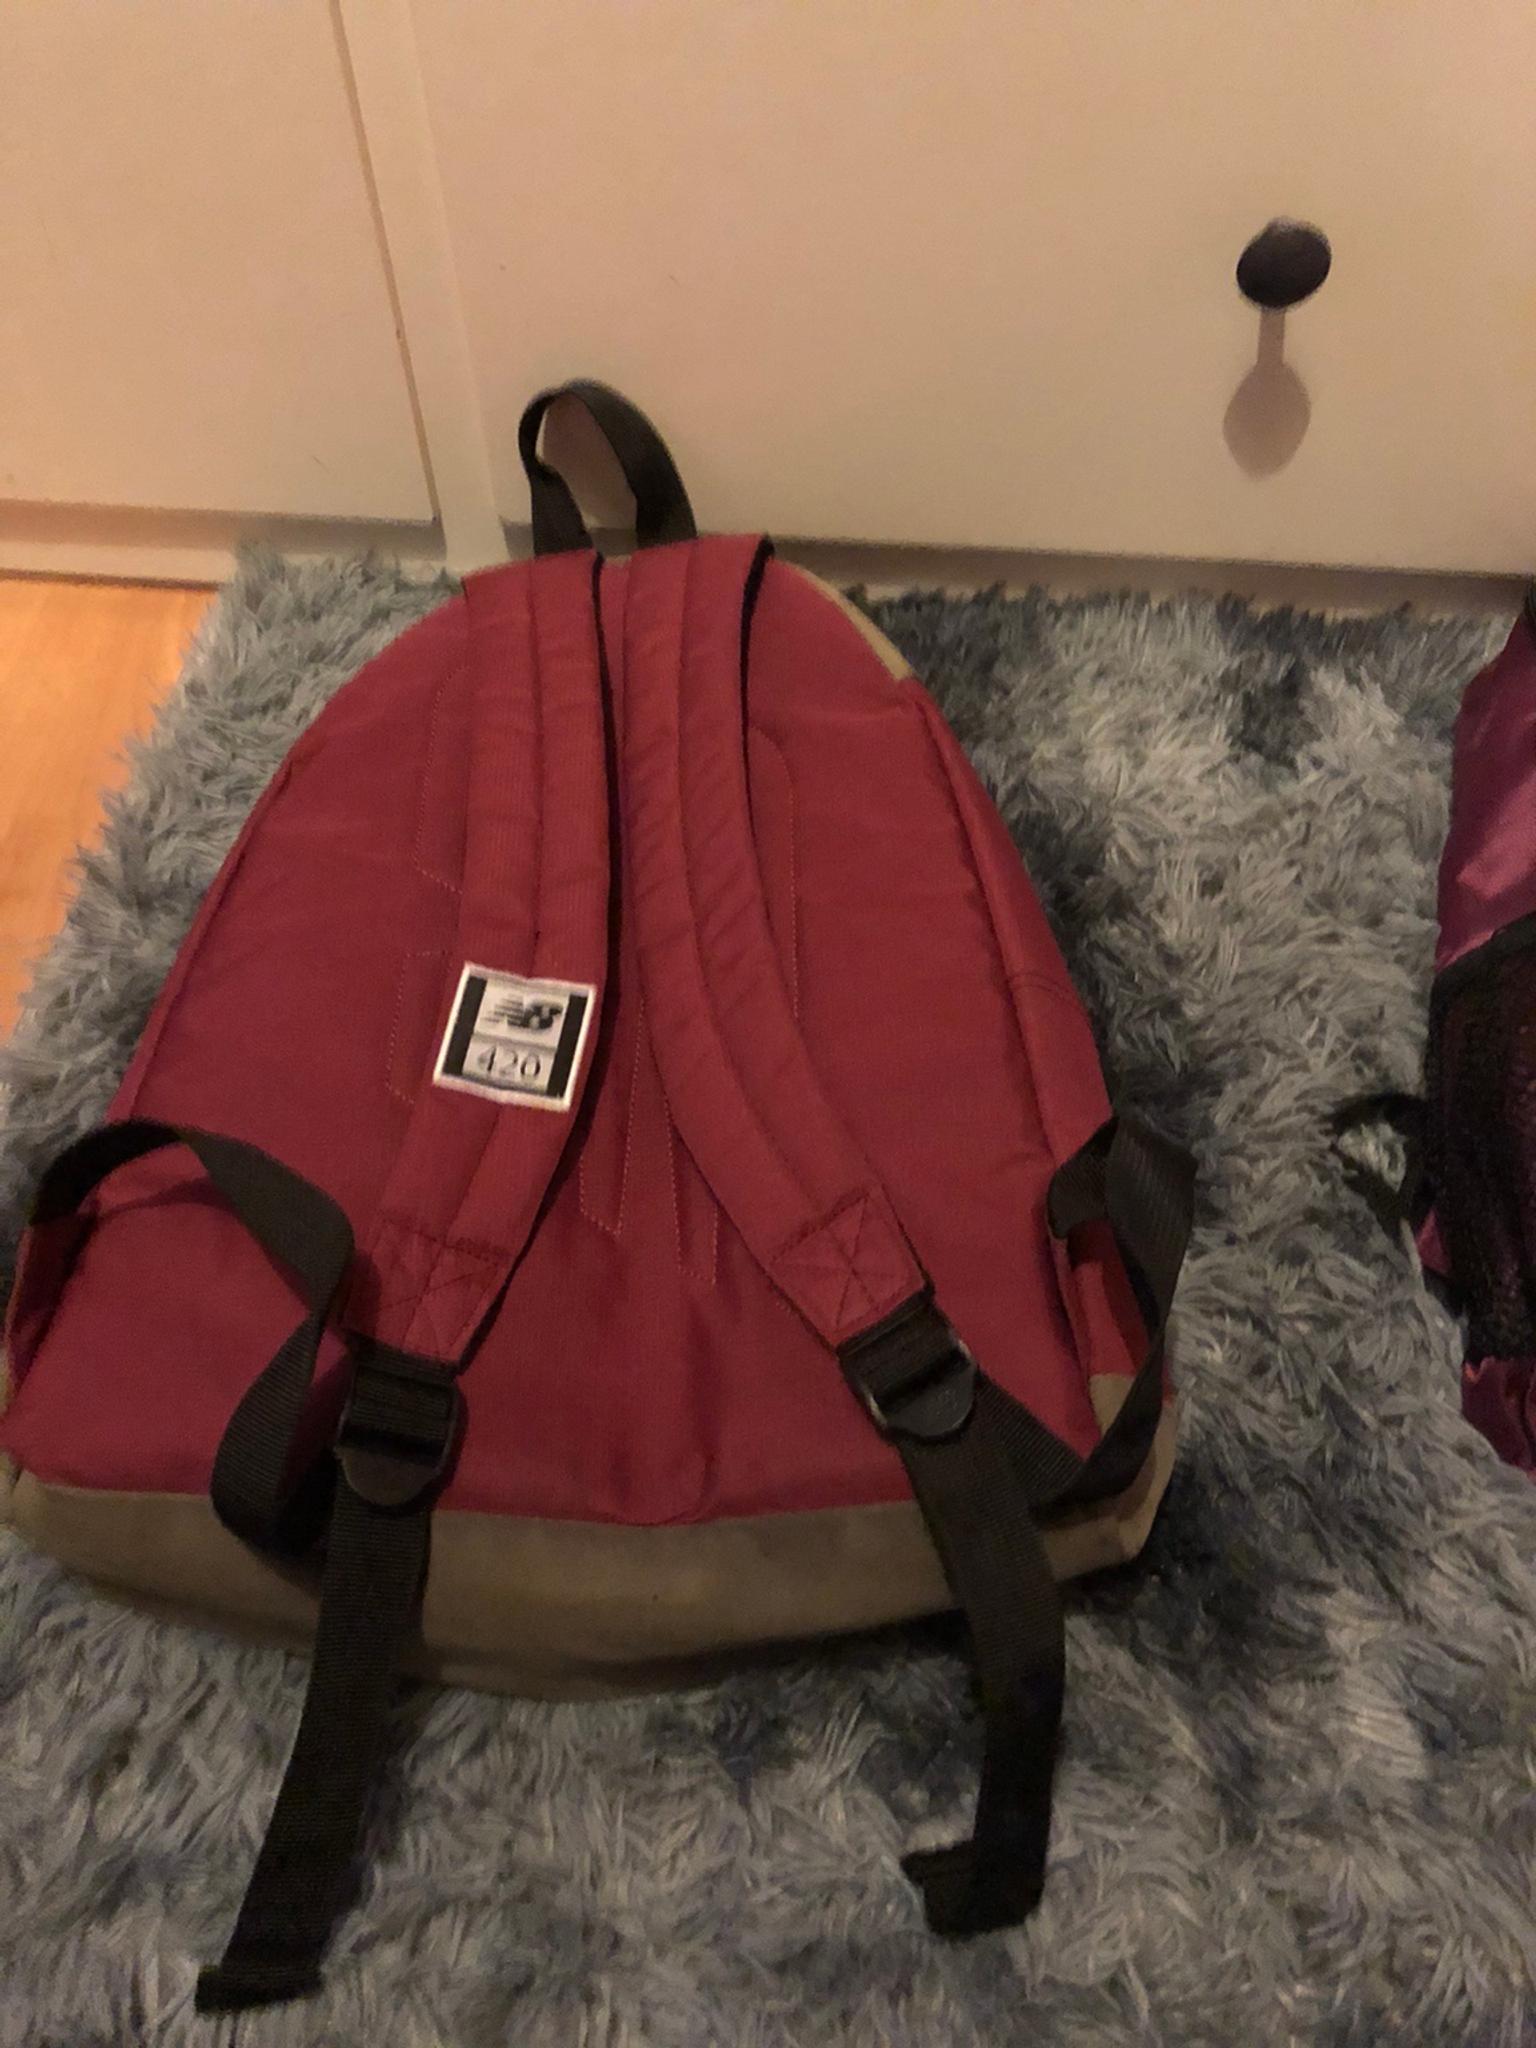 new balance backpack burgundy